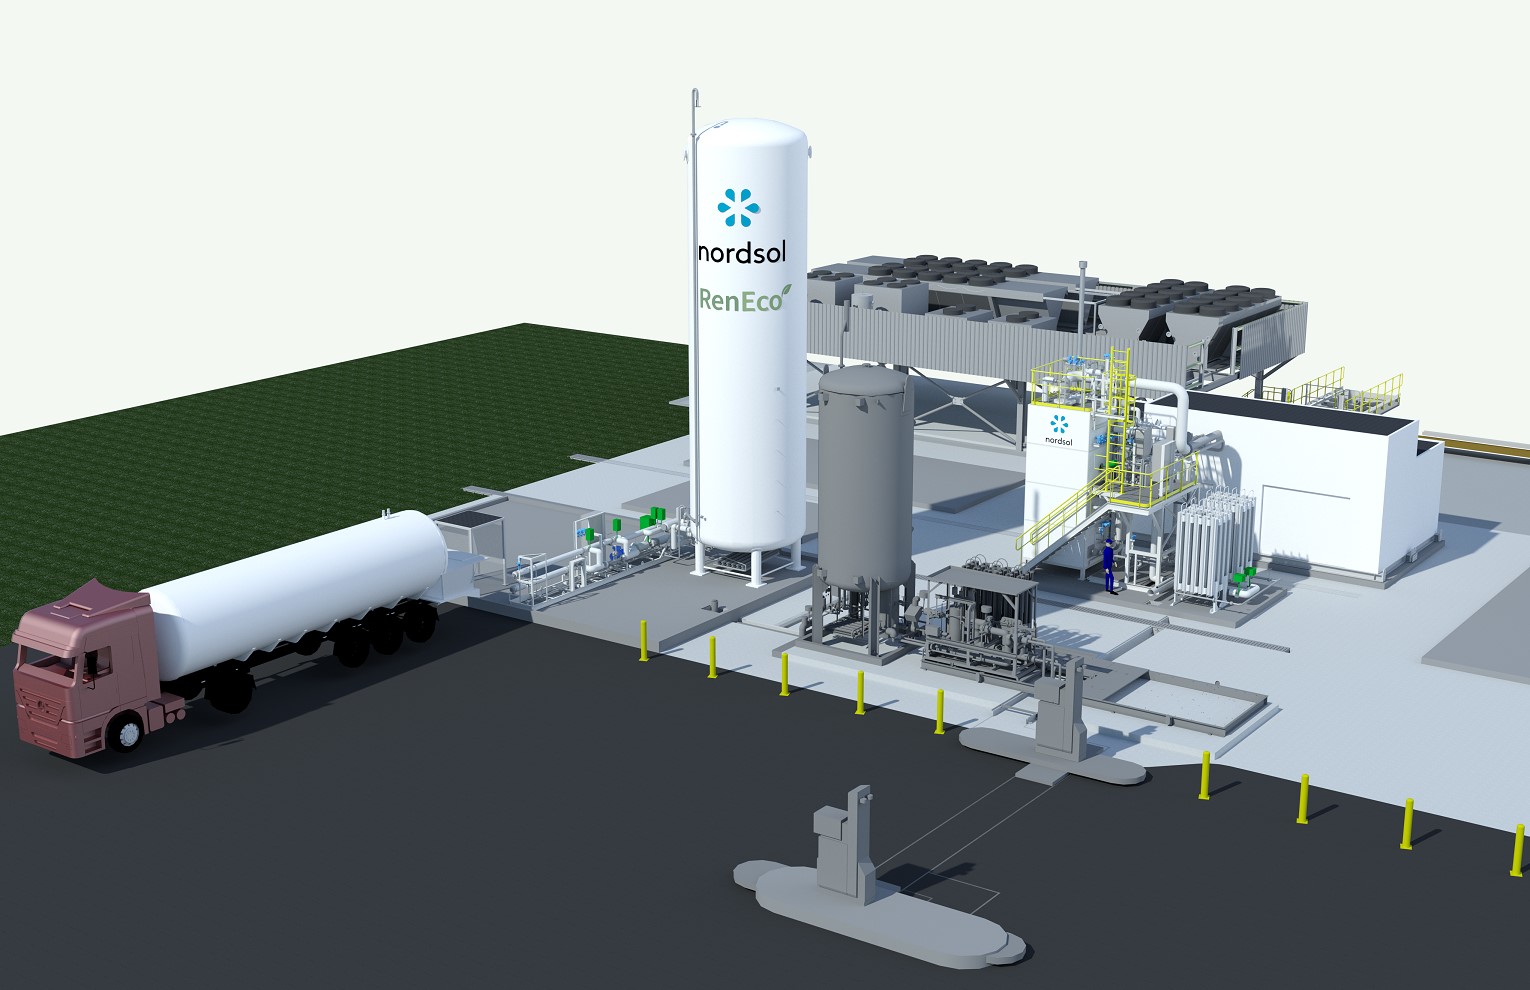 RenEco, Nordsol plan to launch UK bio-LNG plant in Q1 2024